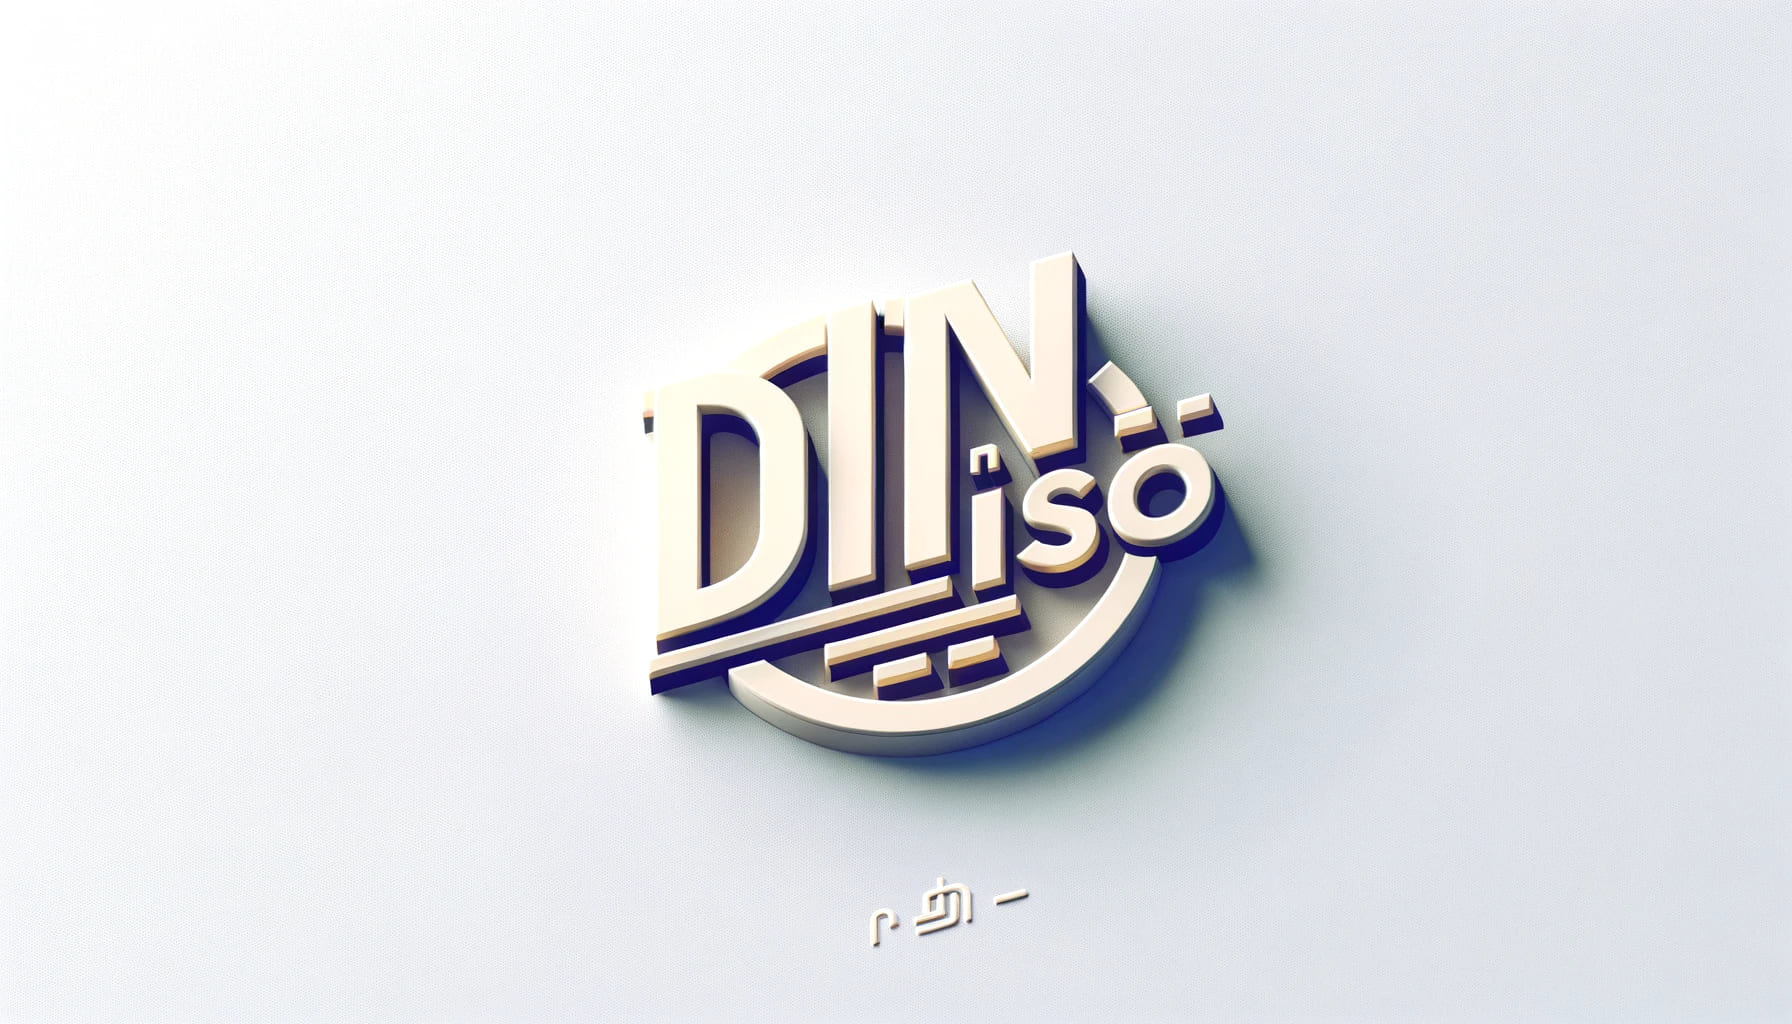 DIN-ISO